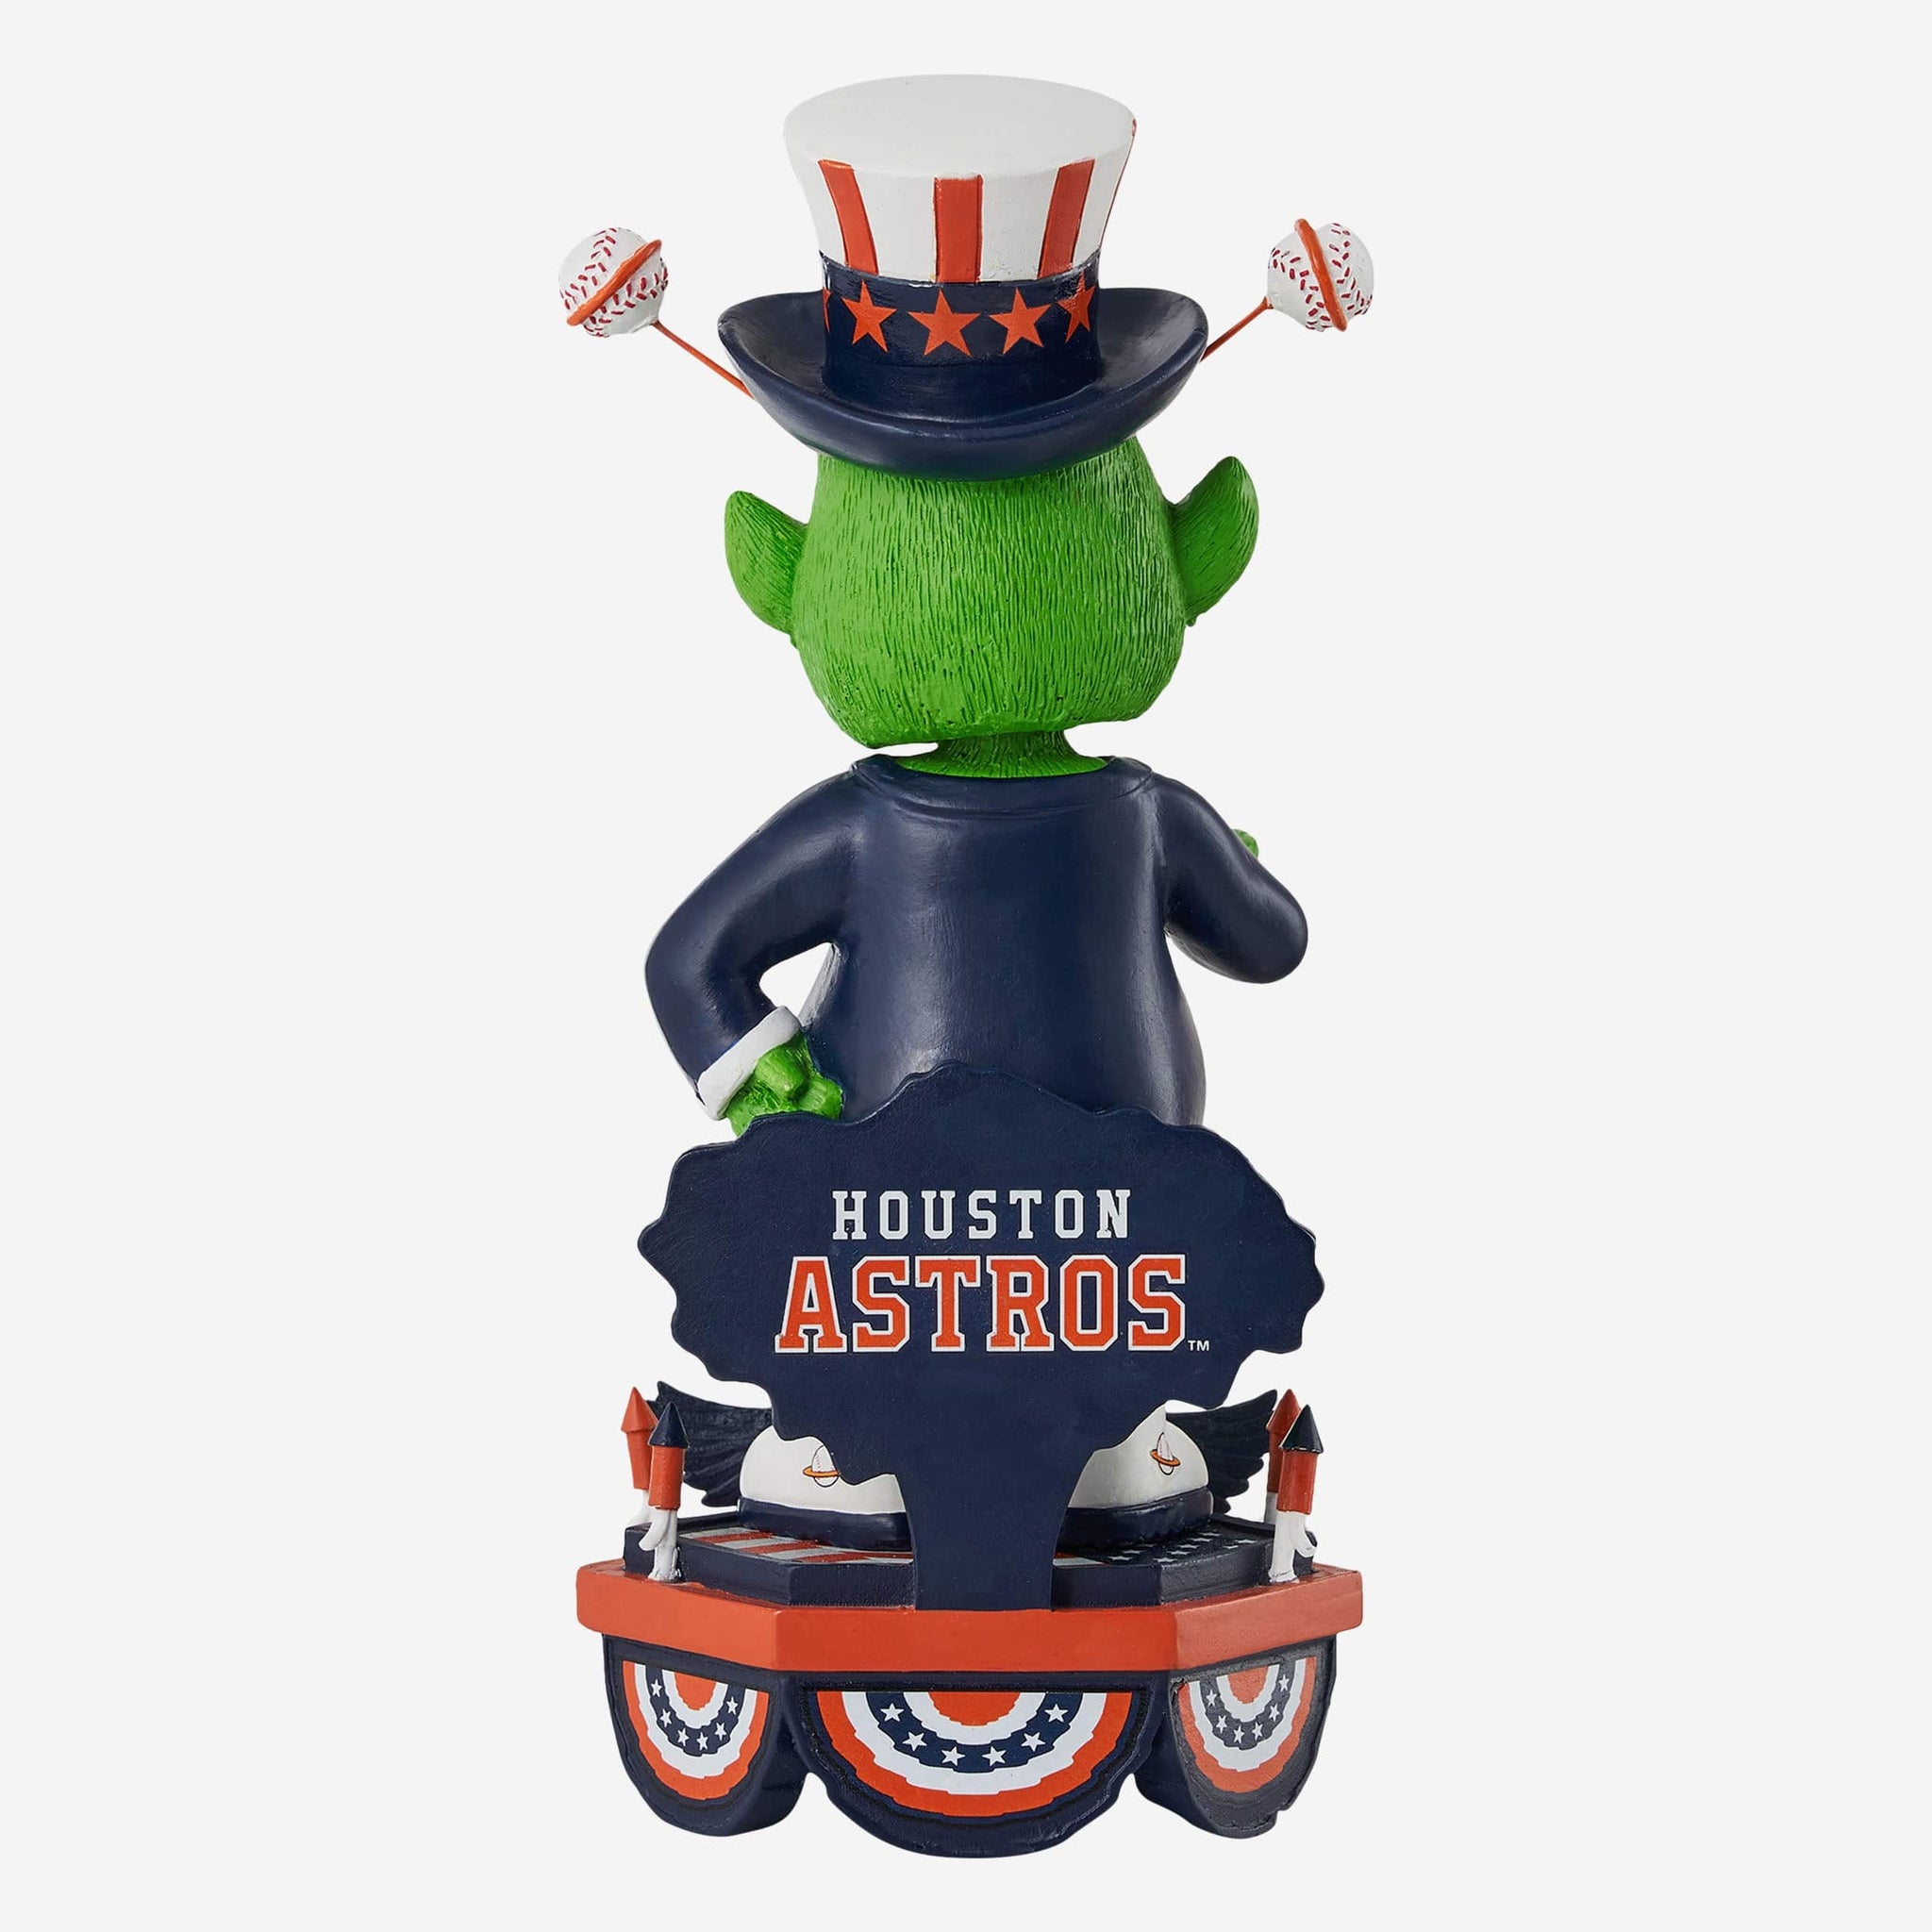 Houston Astros Orbit Spectacular Mascot Bobblehead FOCO